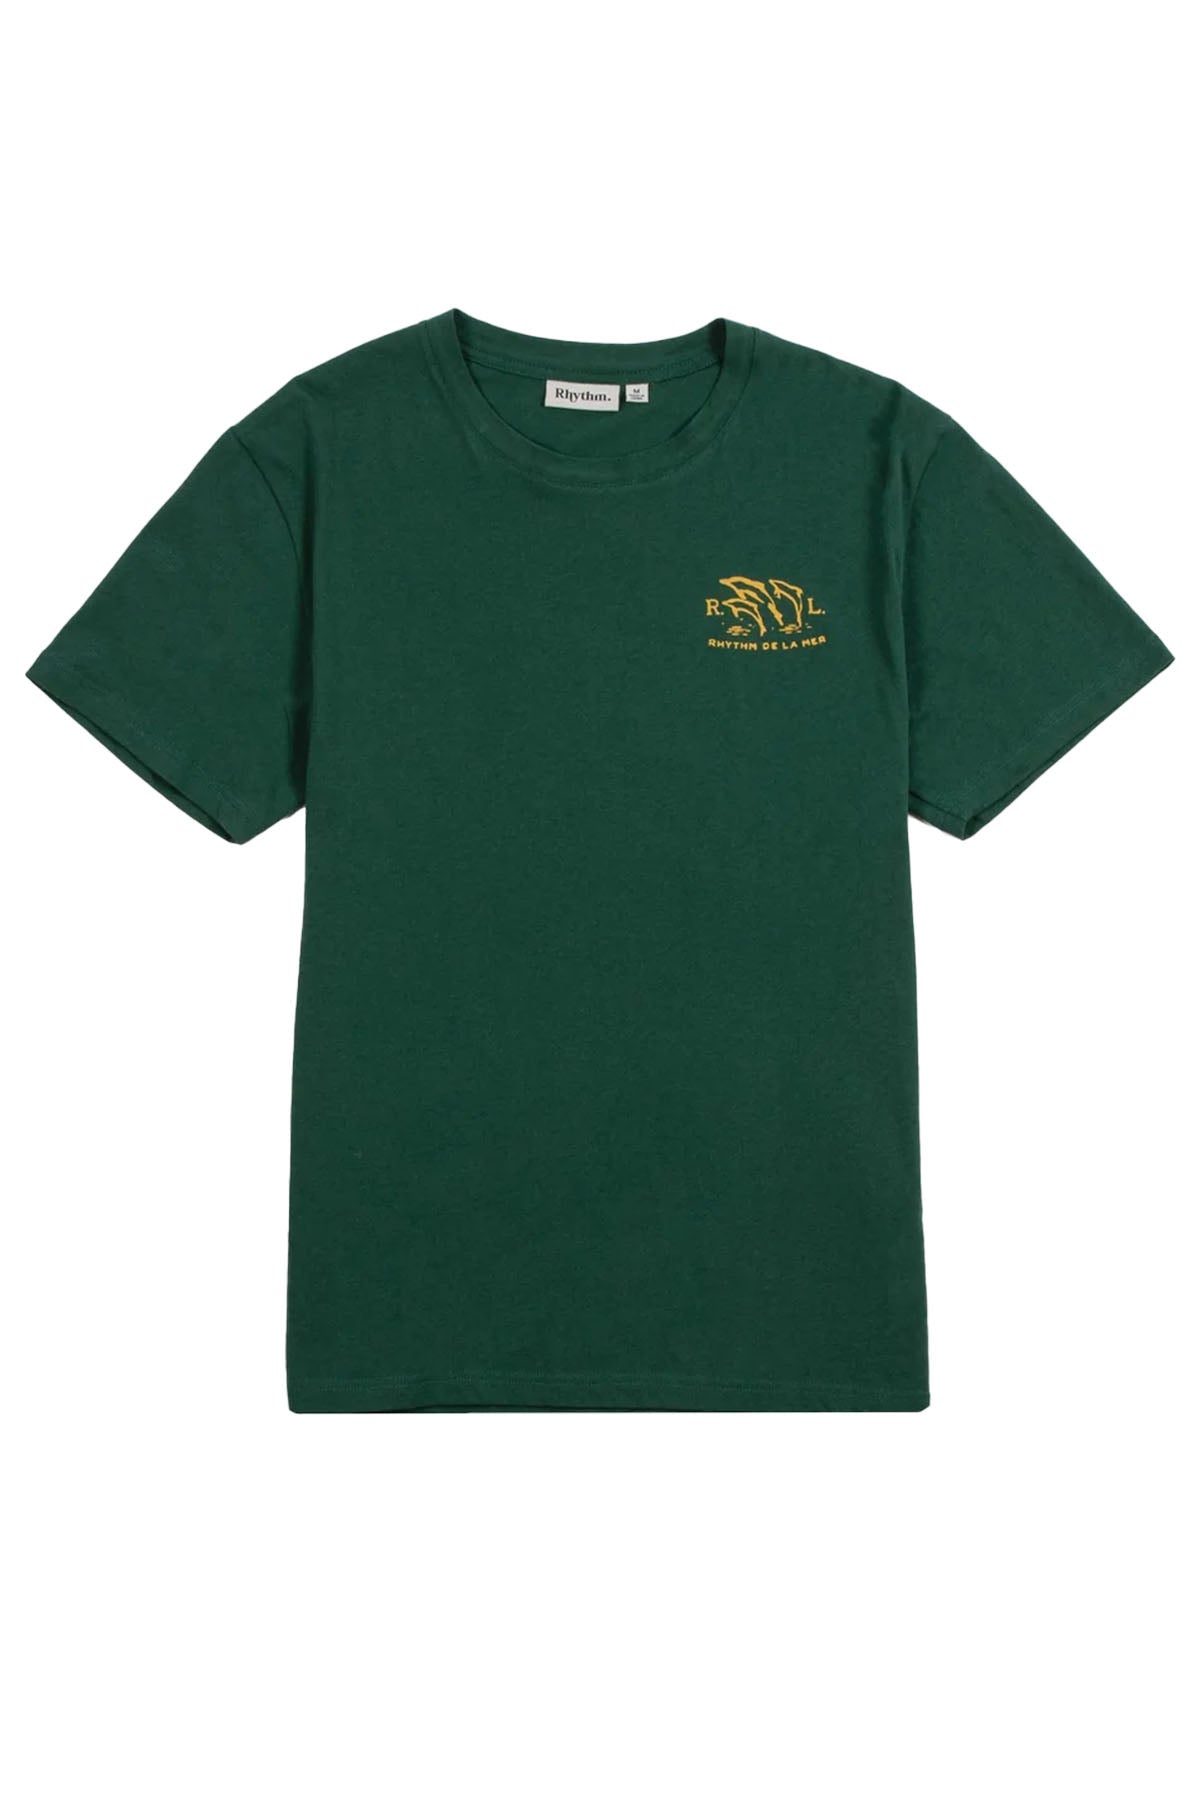 Rhythm - De La Mer SS T-Shirt - Green - Flatlay